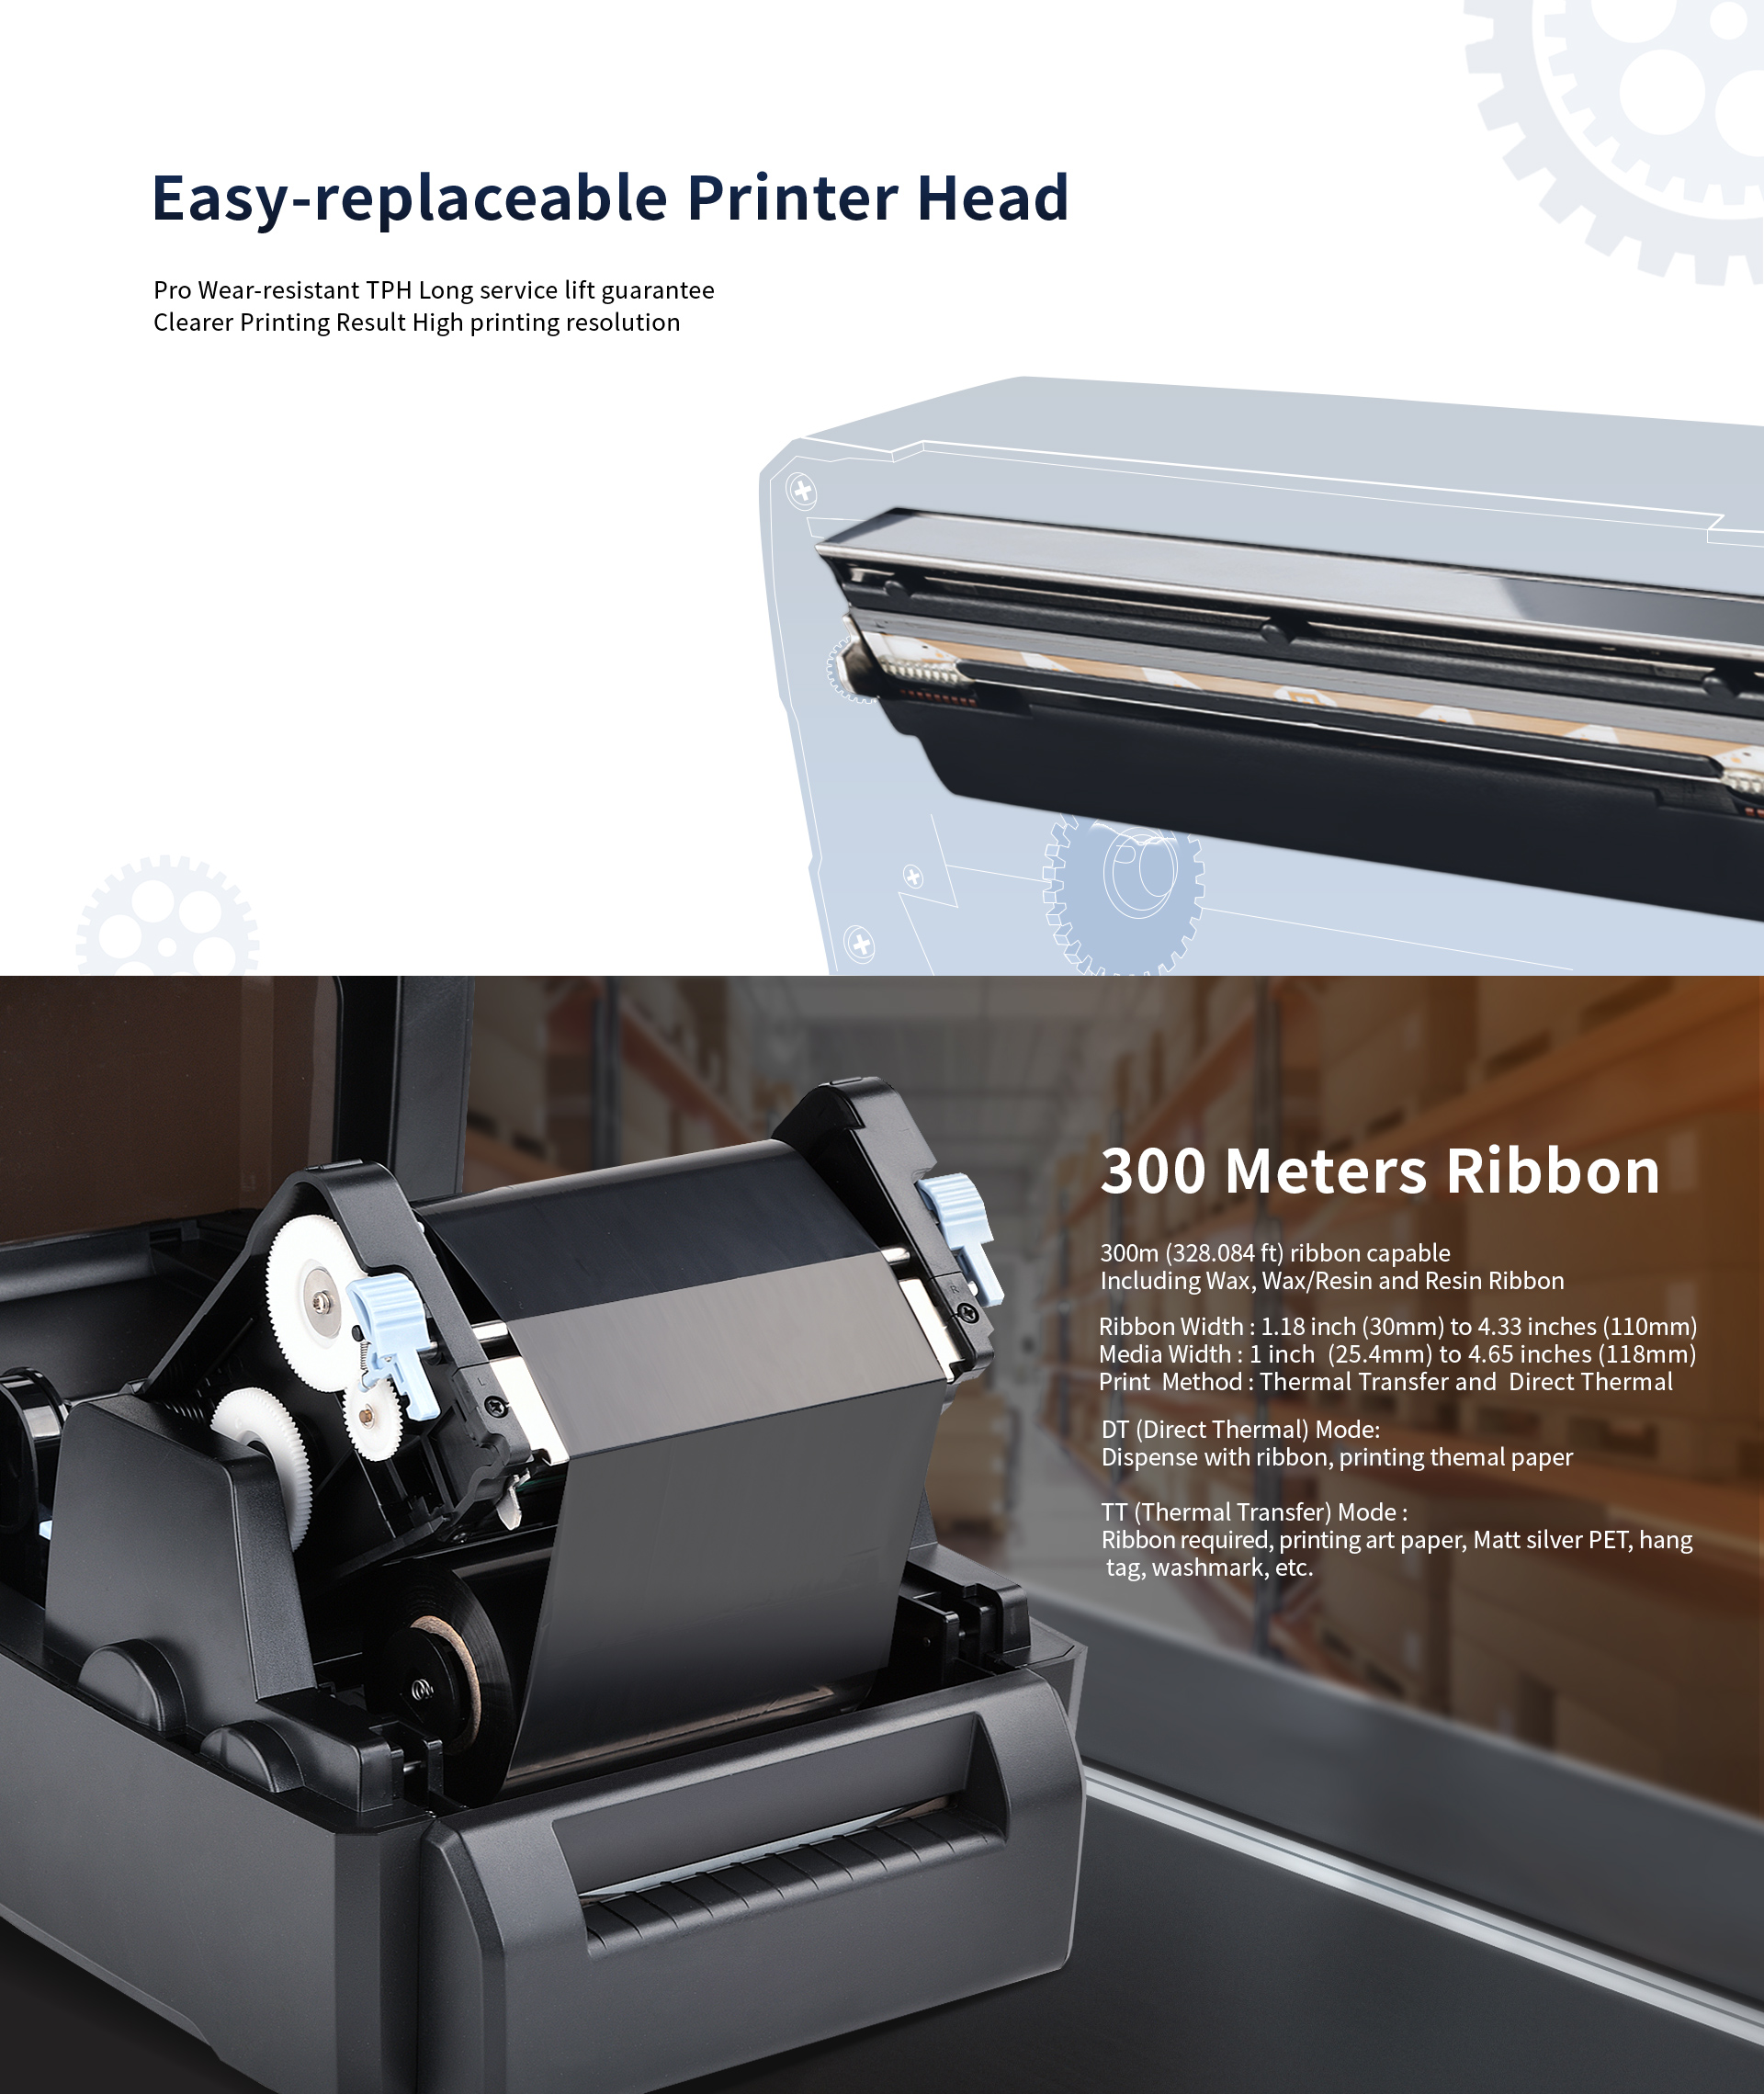 Easy-replaceable Printer Head